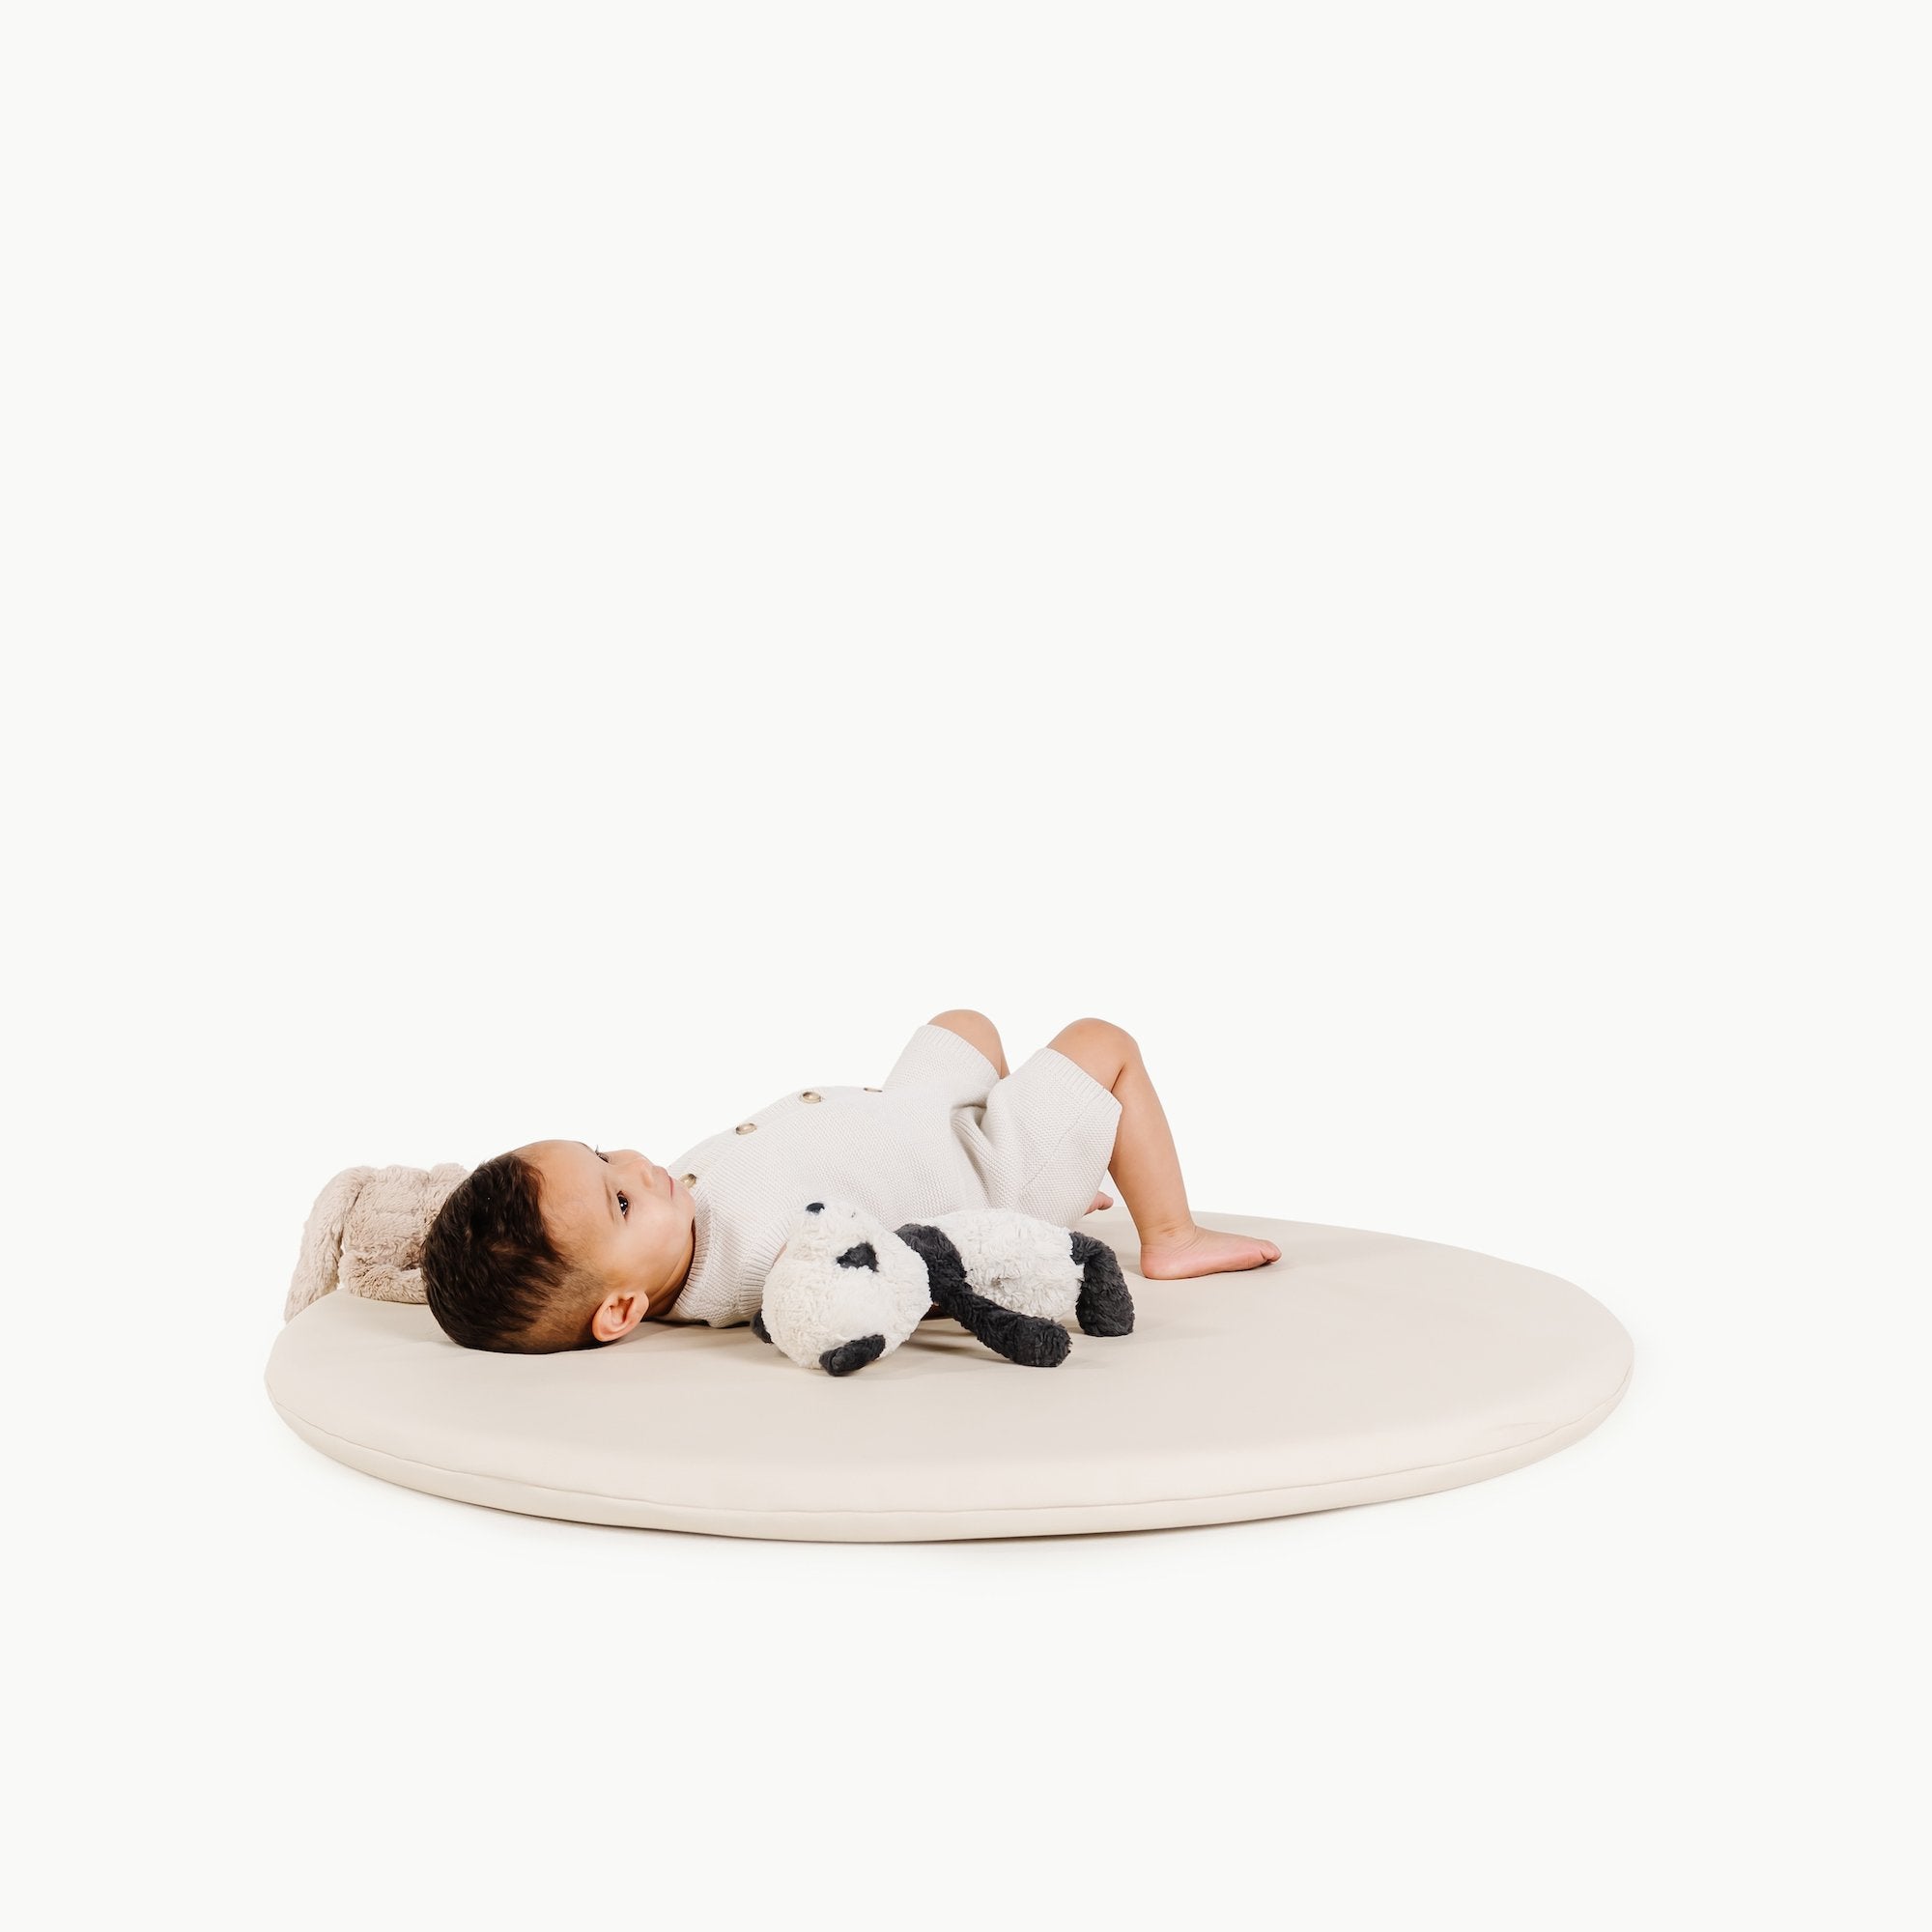 Ivory / Circle@Boy laying on Ivory Padded Mini Circle